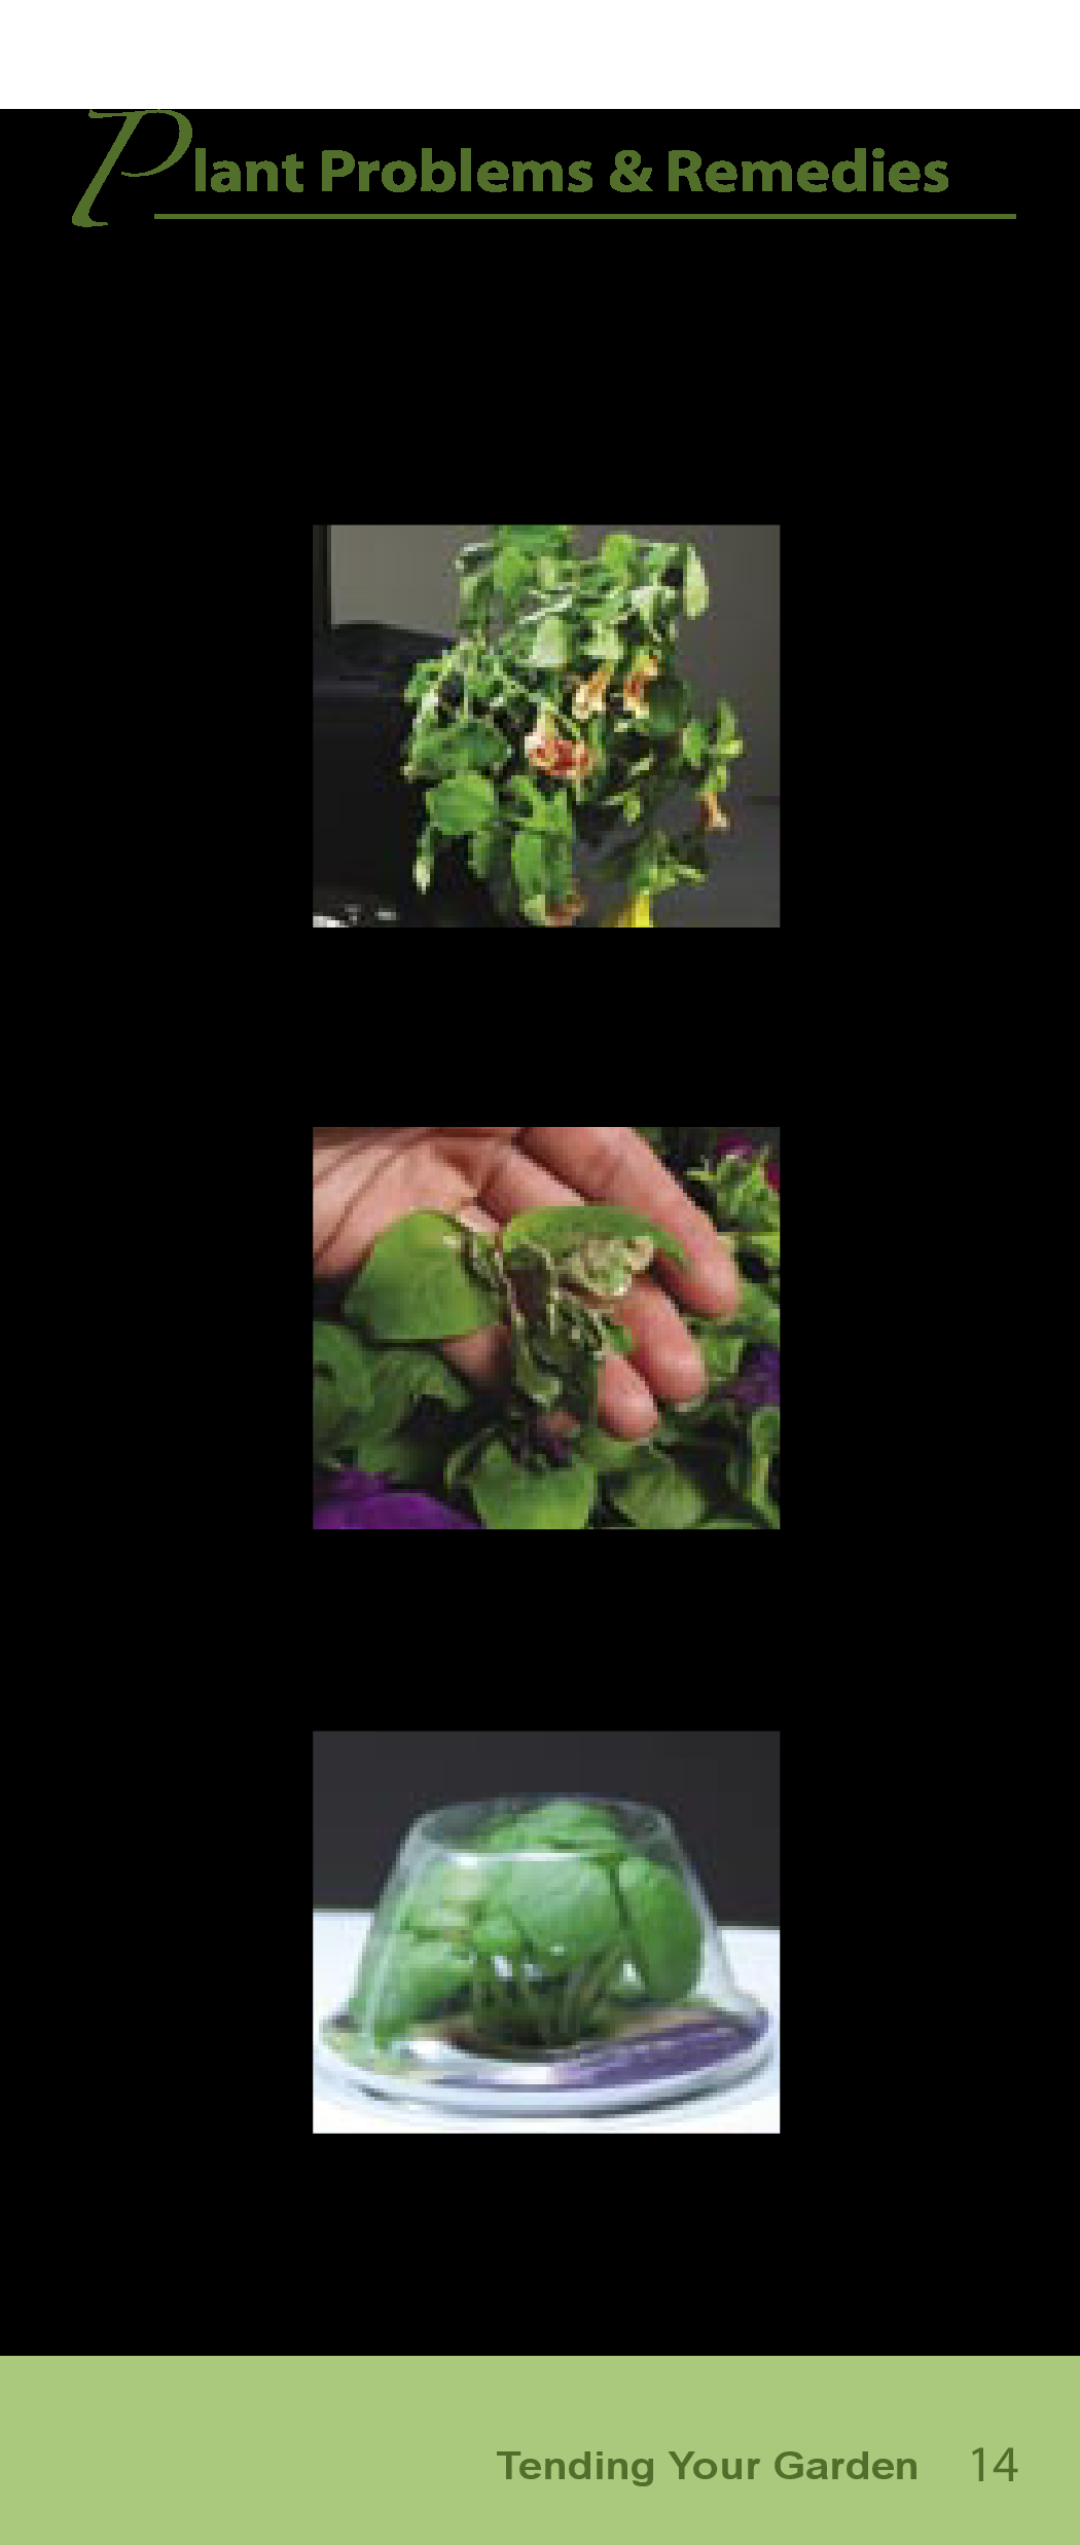 AeroGarden Flower Series P lant Problems & Remedies, Tending Your Garden, Bulbs.. Raise the Lamp Hood, Wilted, Burned 